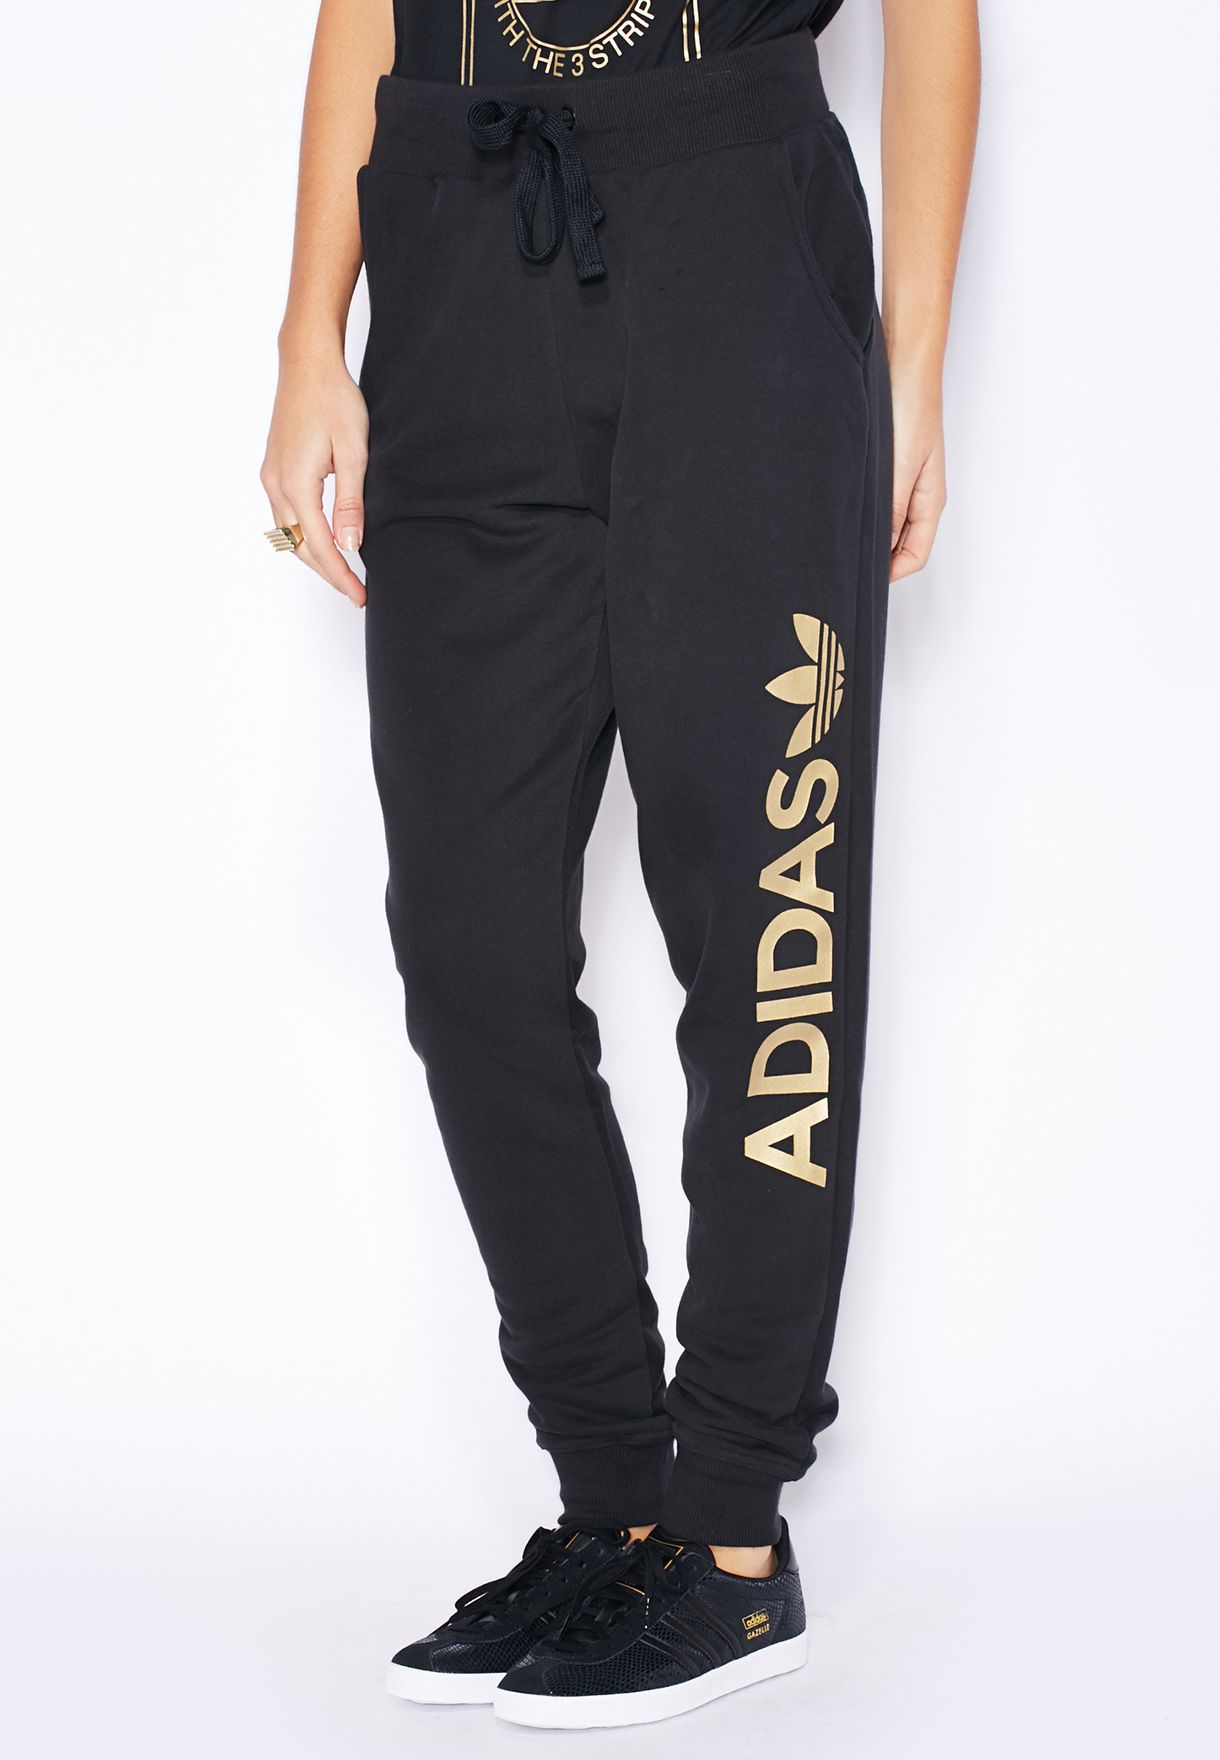 black and gold adidas leggings